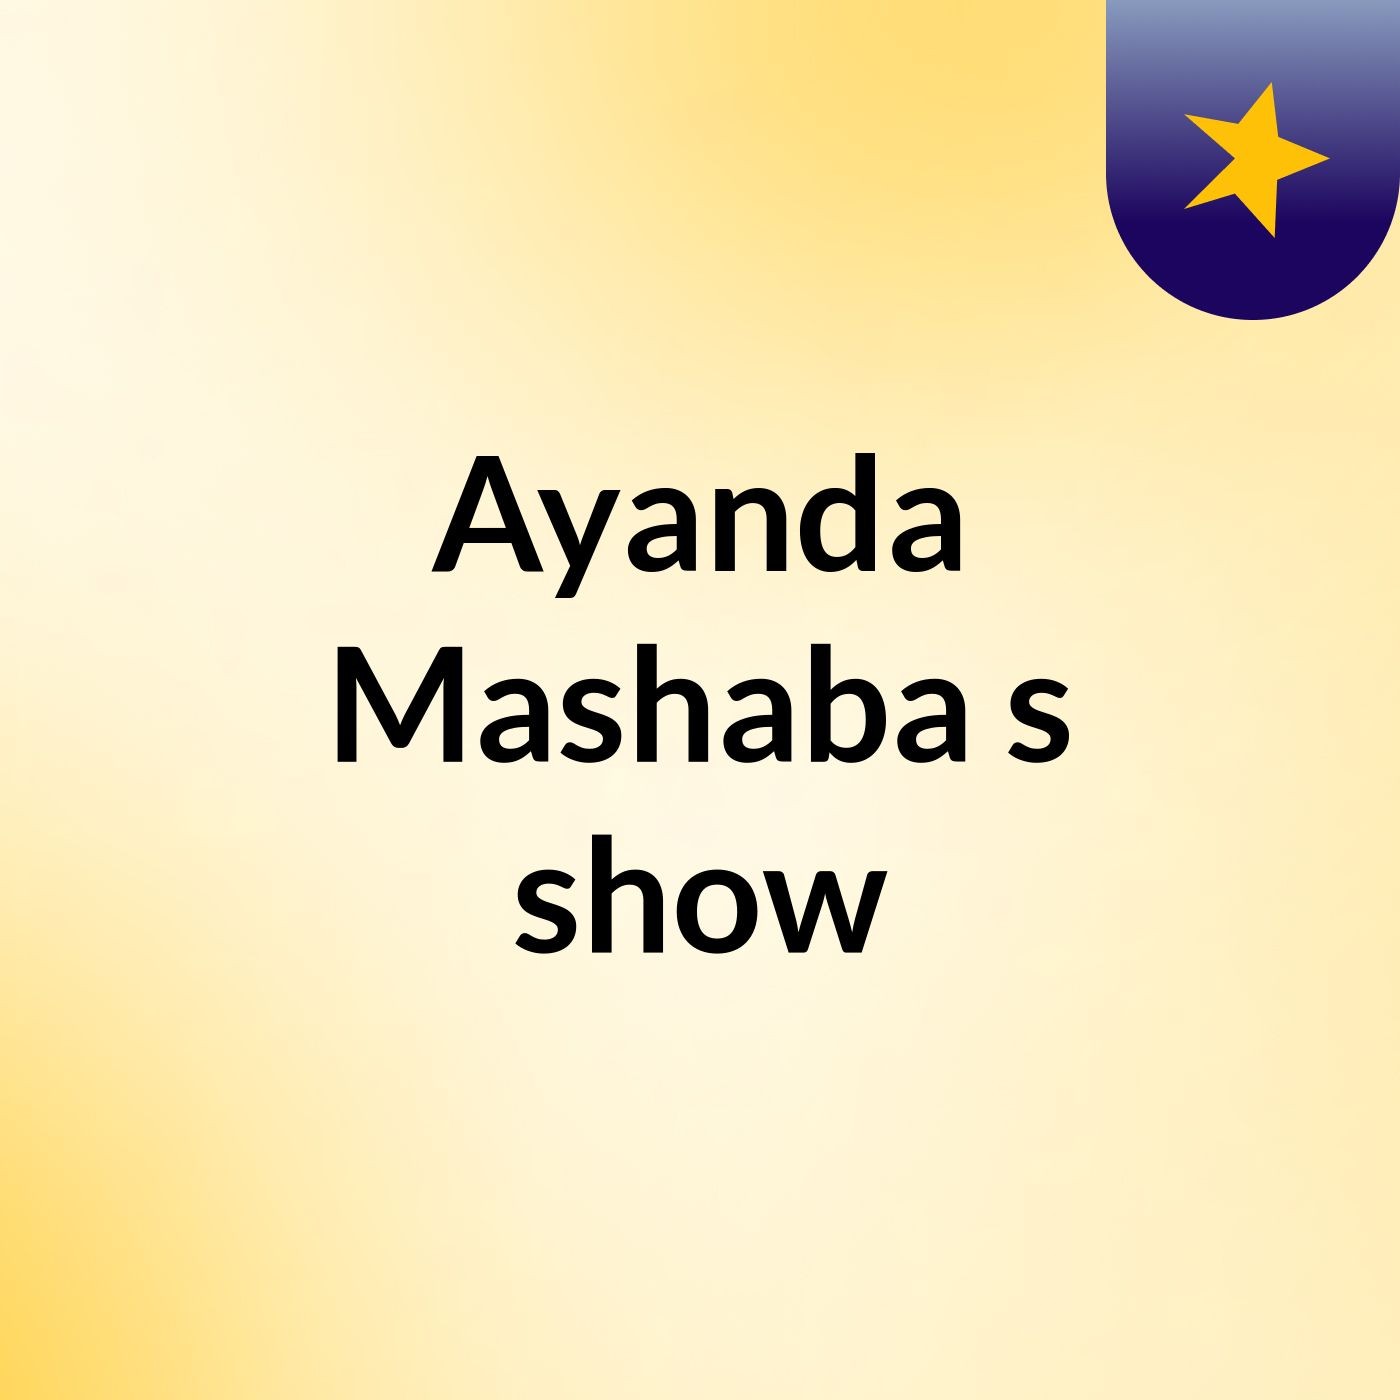 Episode 2 - YandaMan's show